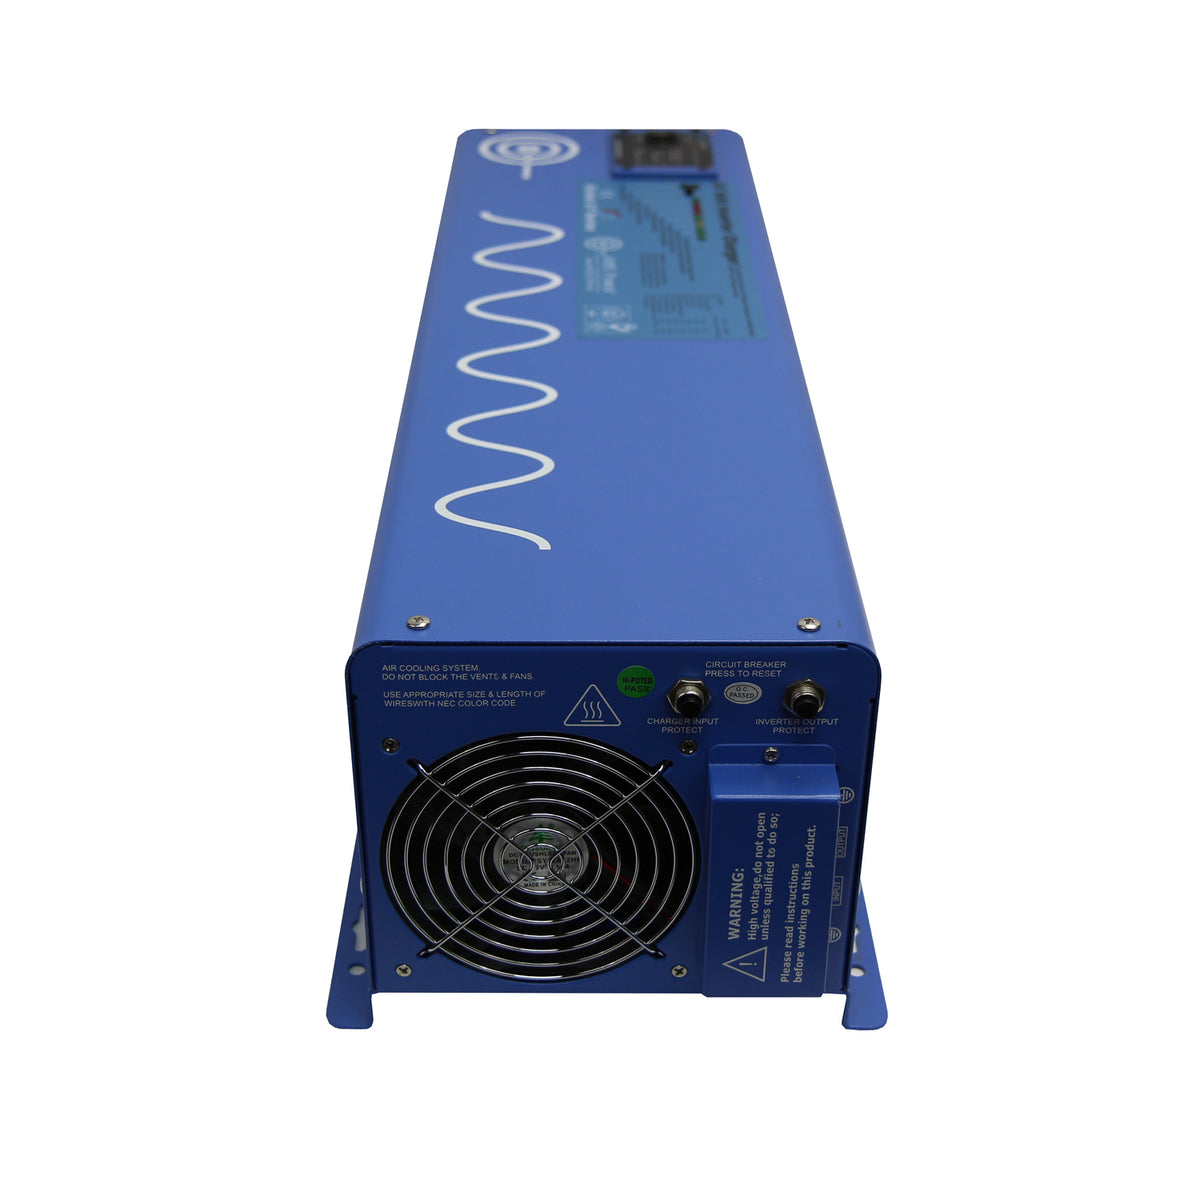 AIMS Power 6000 Watt Pure Sine Inverter Charger 48Vdc / 240Vac Input &amp; 120/240Vac Split Phase Output